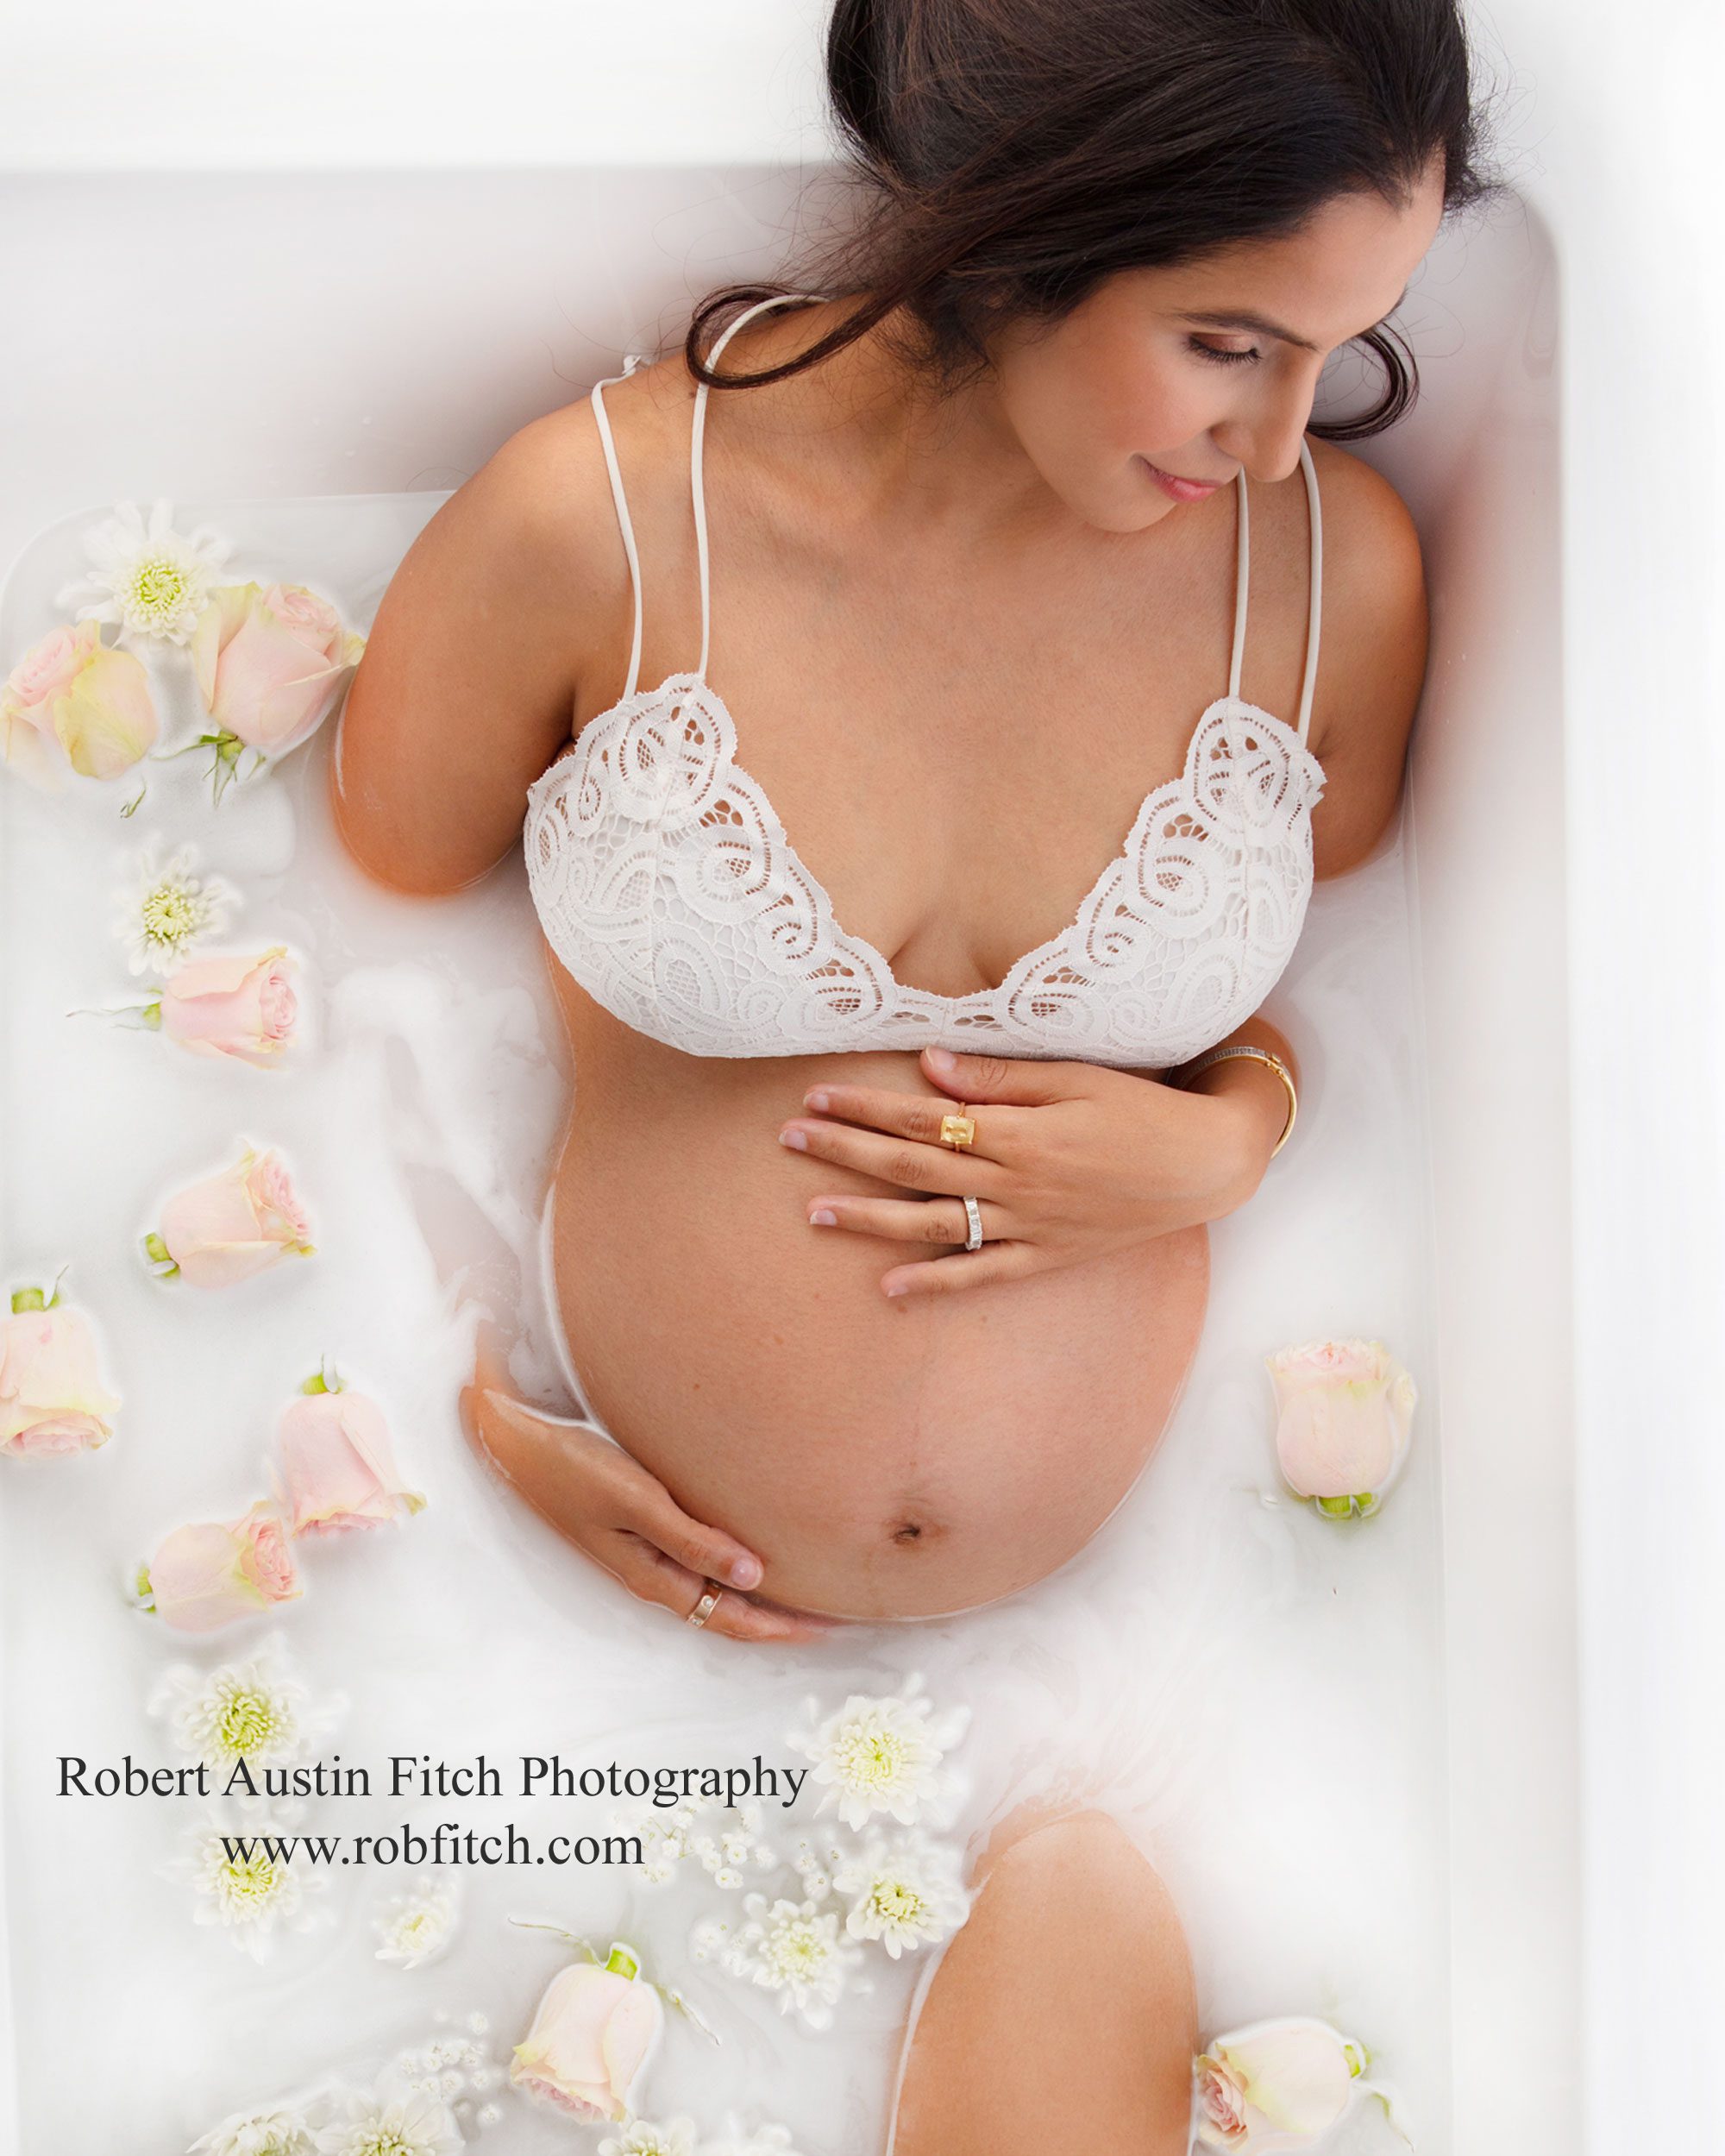 Beautiful Milk Bath Maternity Photo with Roses CT Robert Austin Fitch